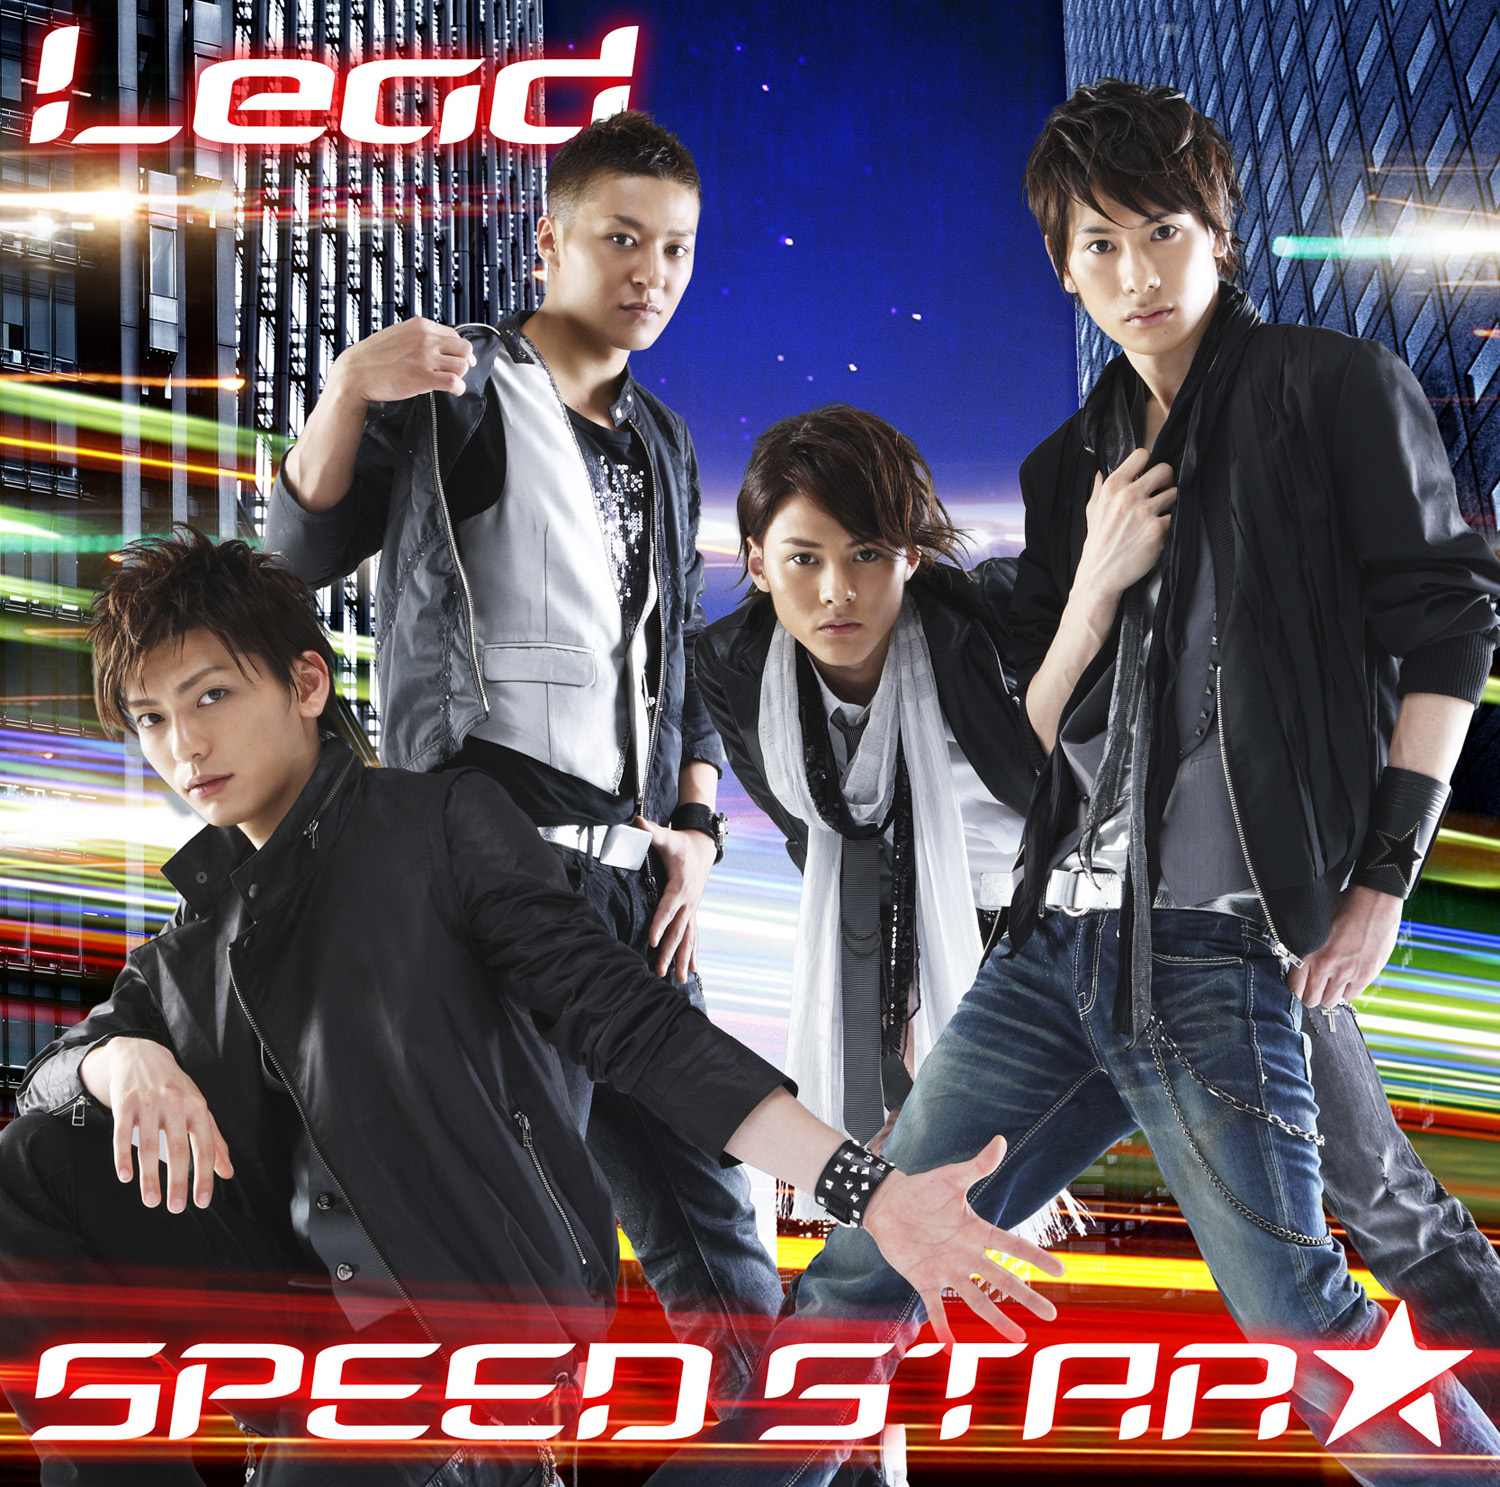 SPEED STAR★